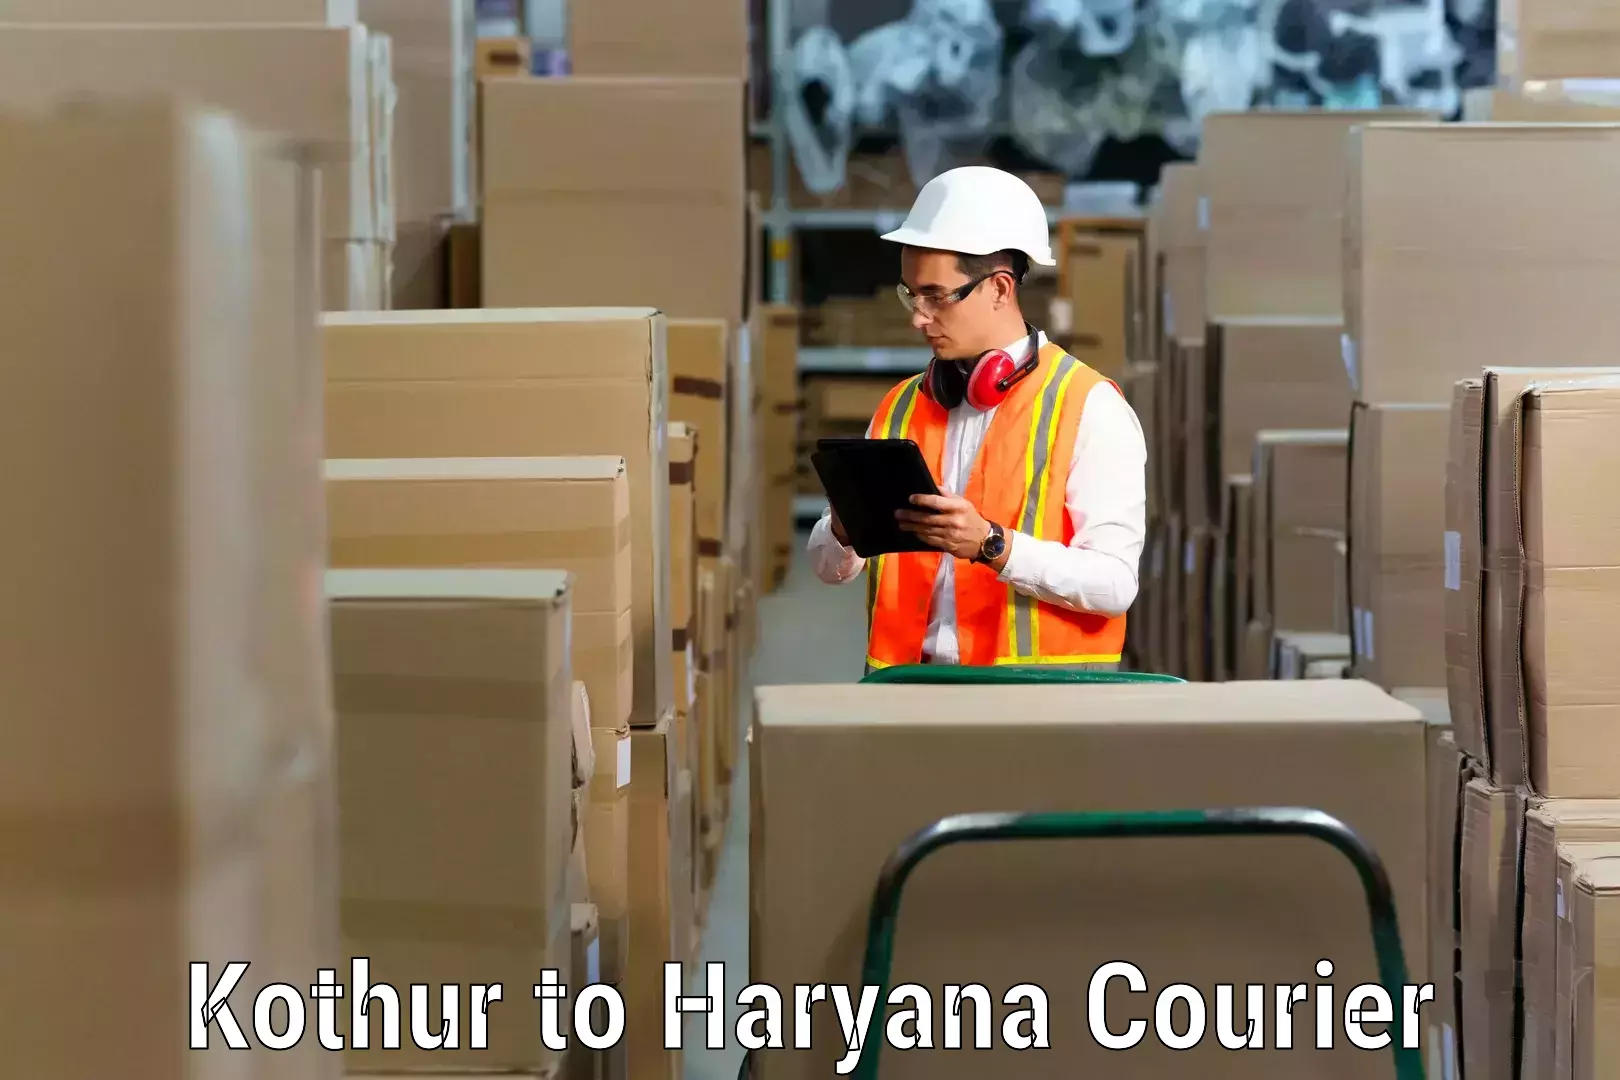 Efficient moving company Kothur to Haryana